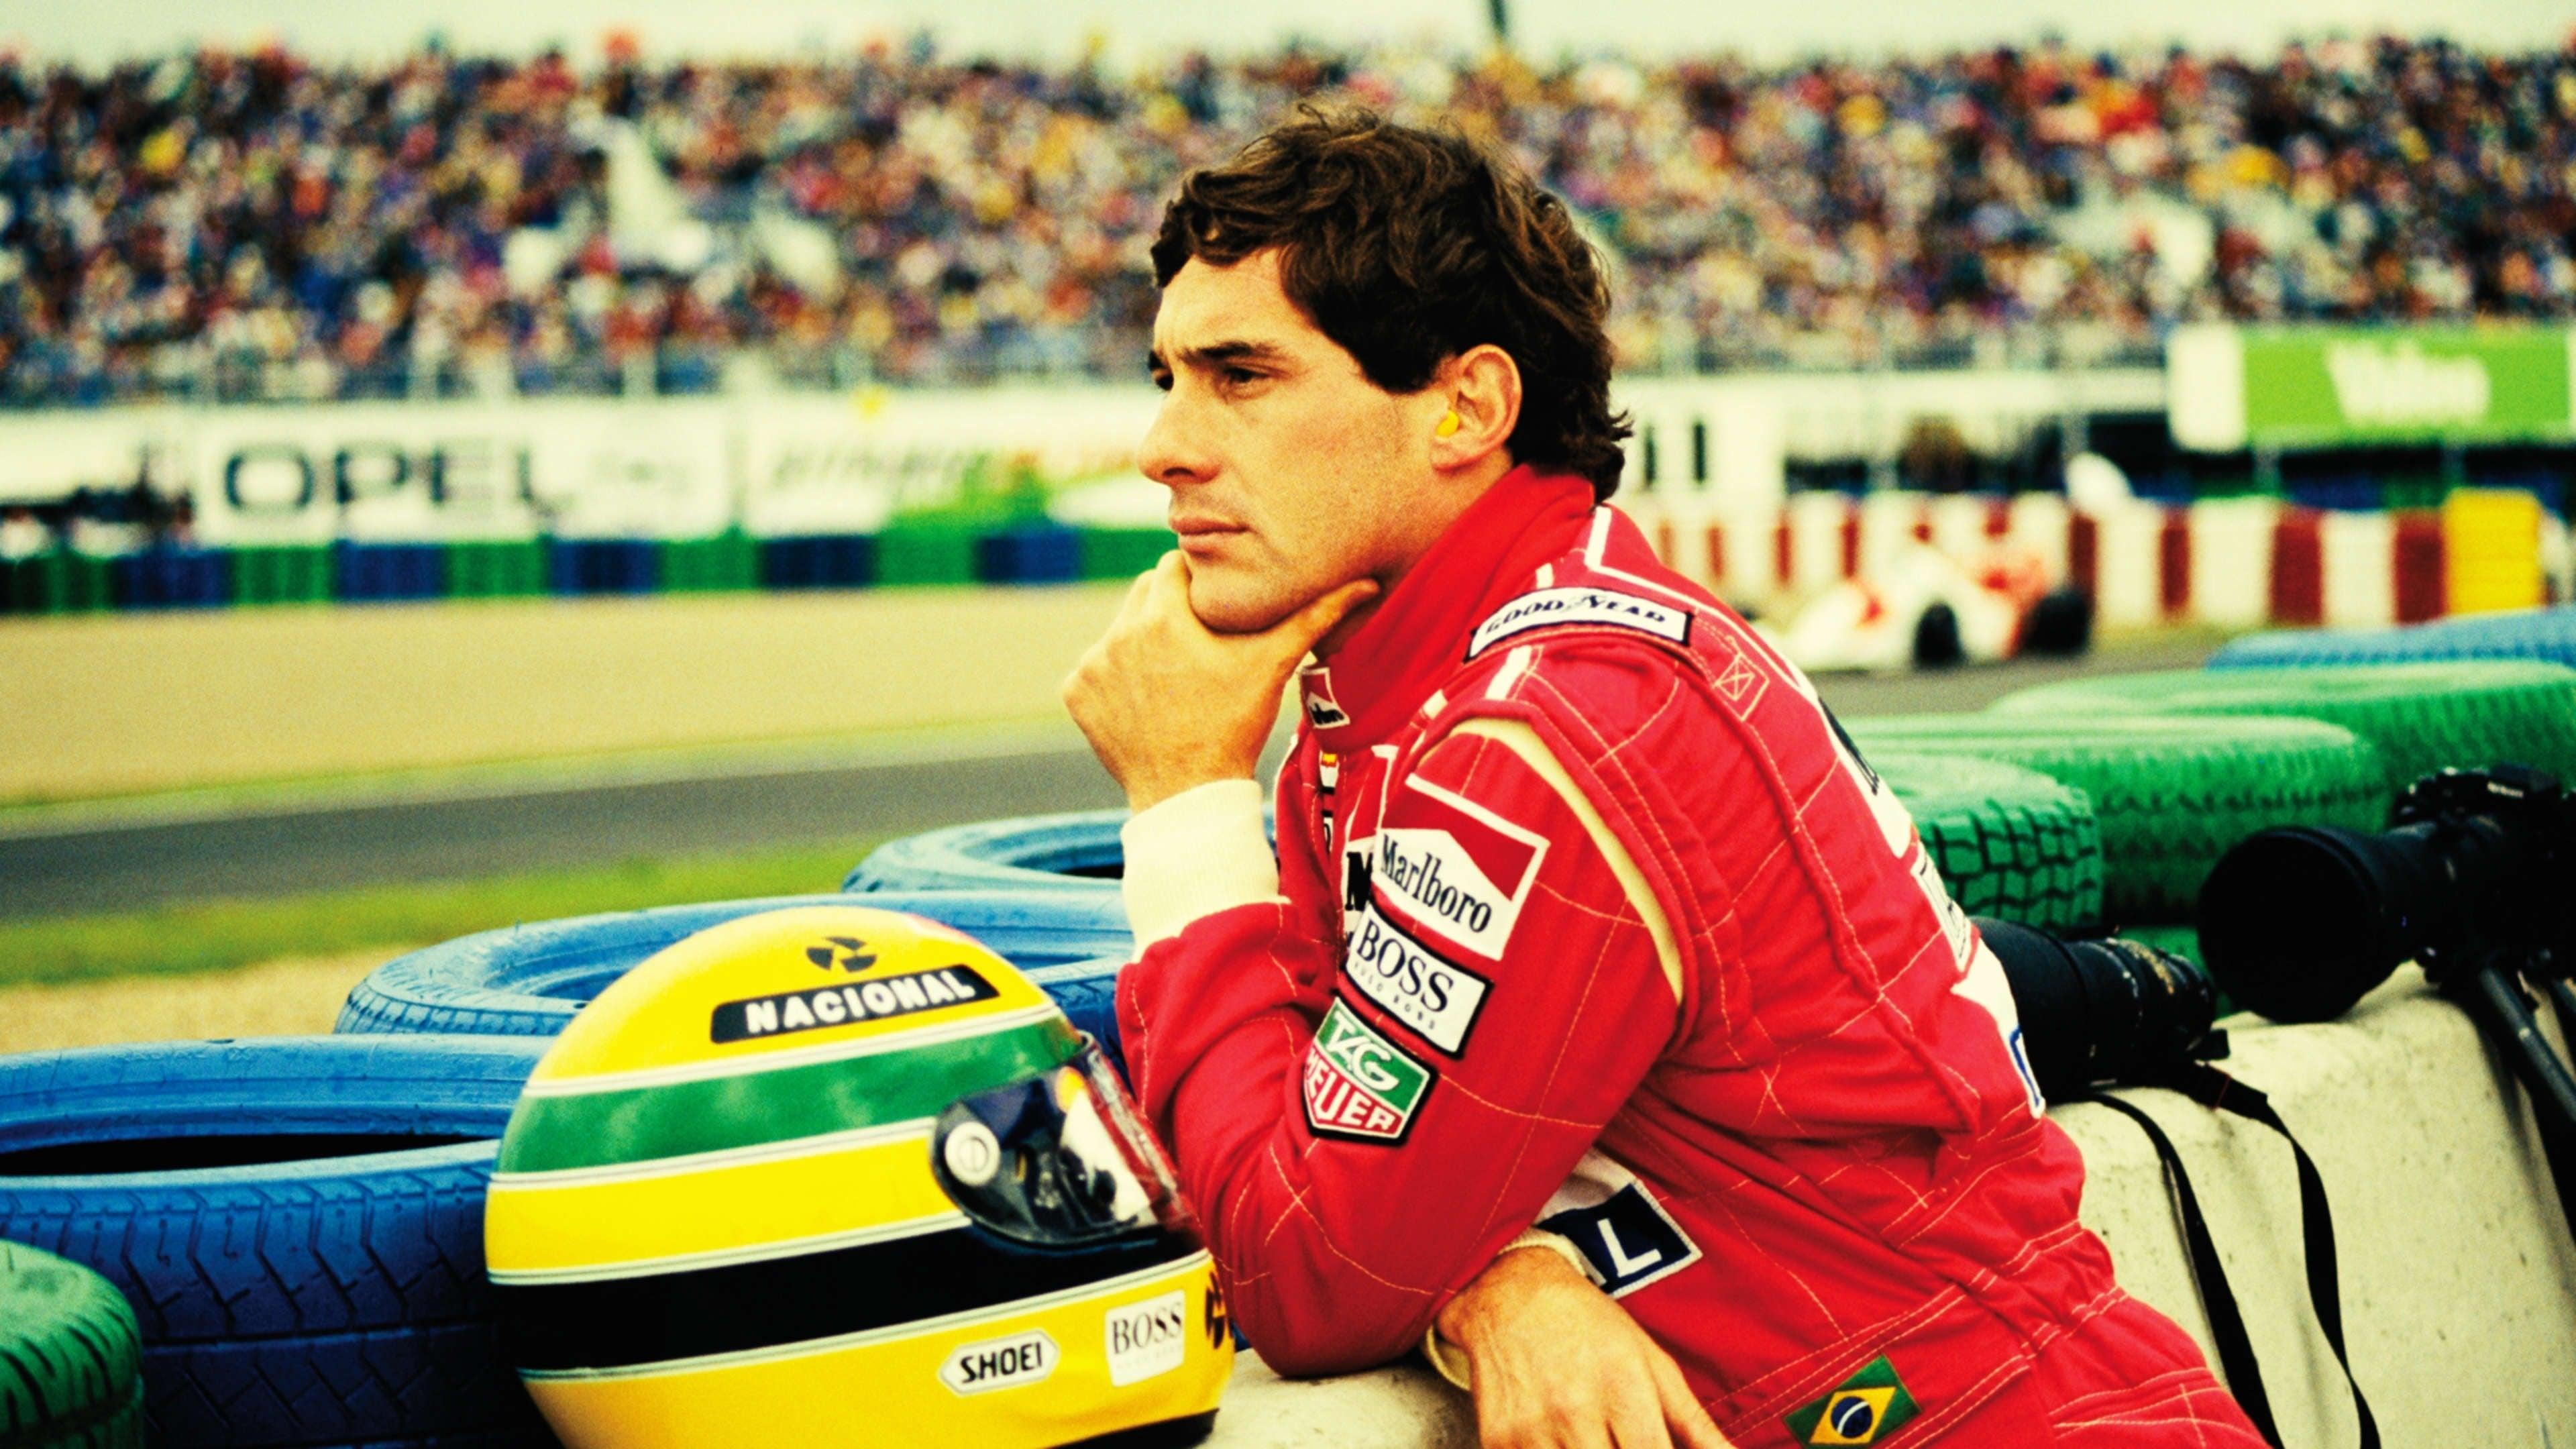 Senna backdrop